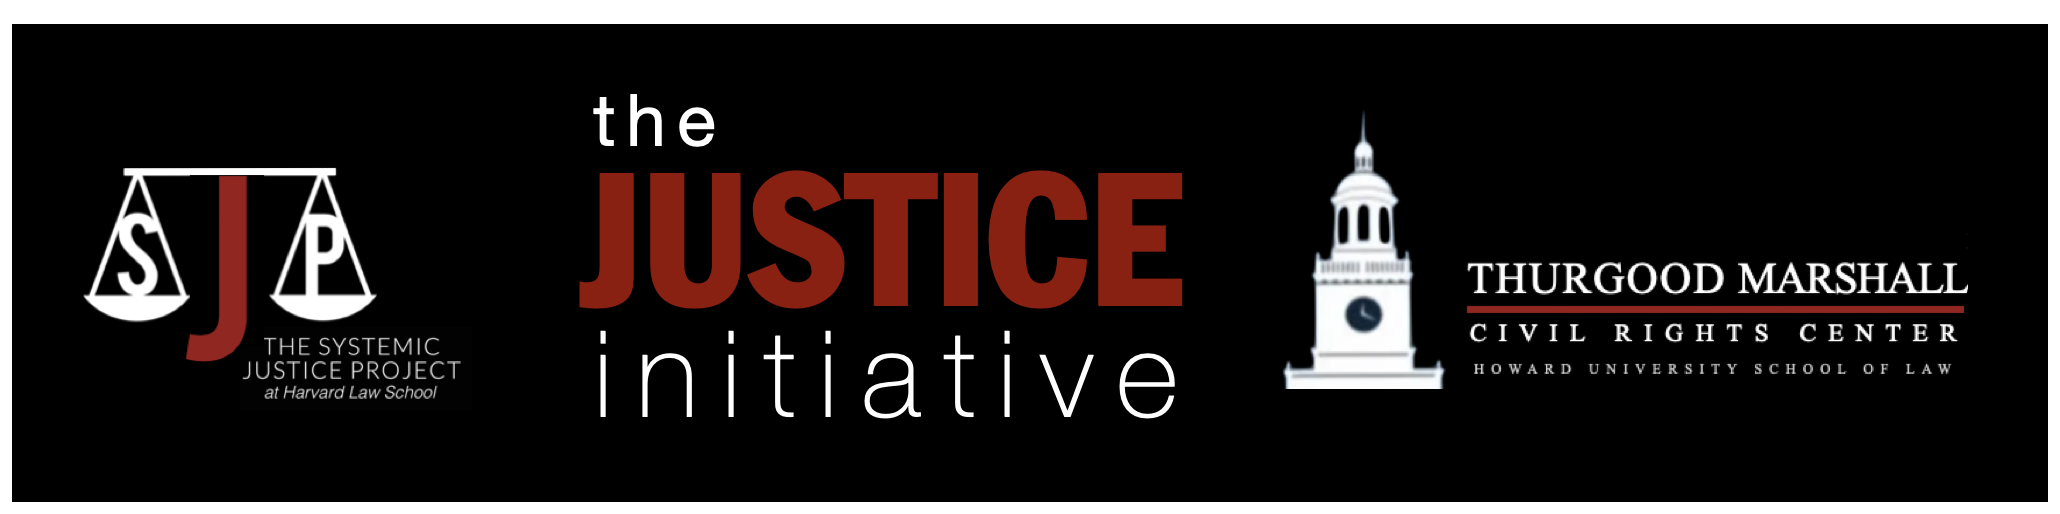 The Justice Initiative logo